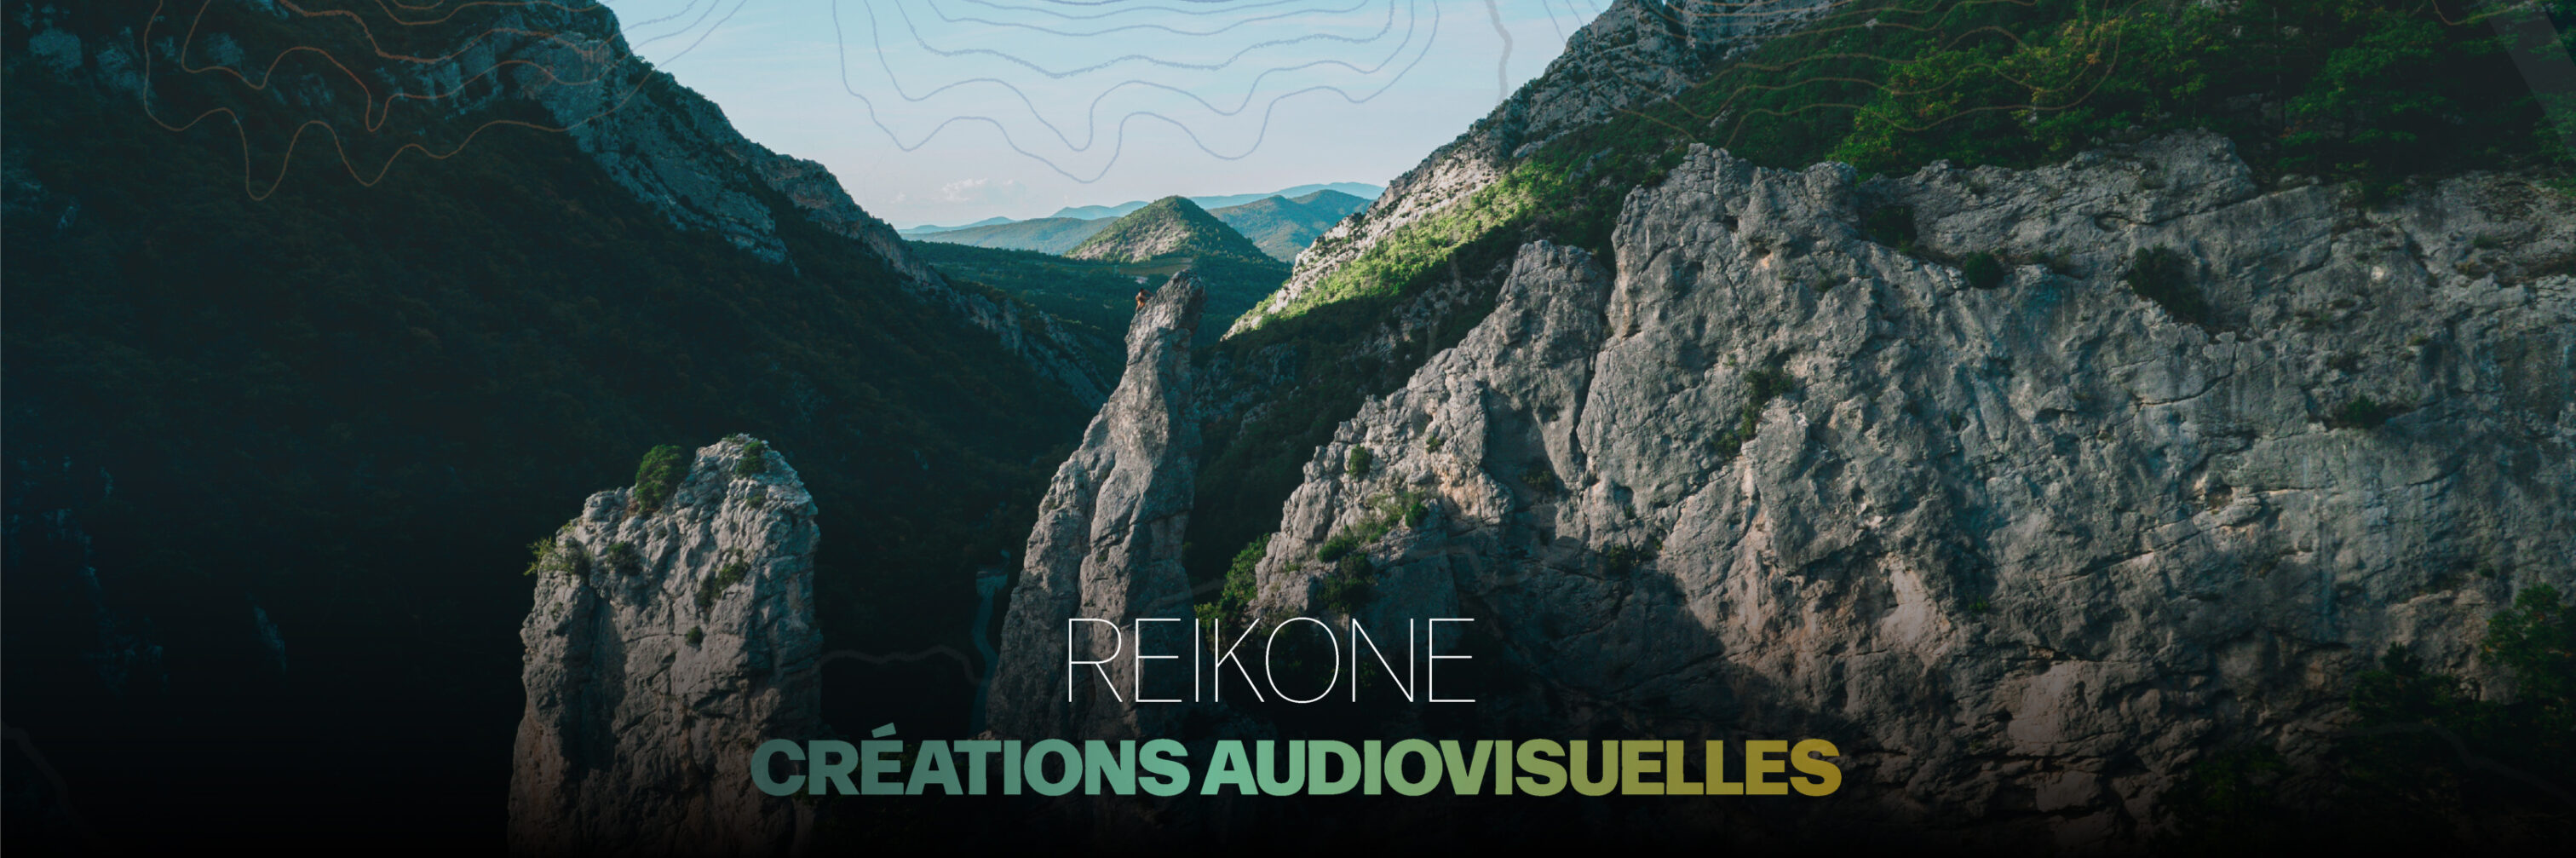 Production Audiovisuelle | Reikone